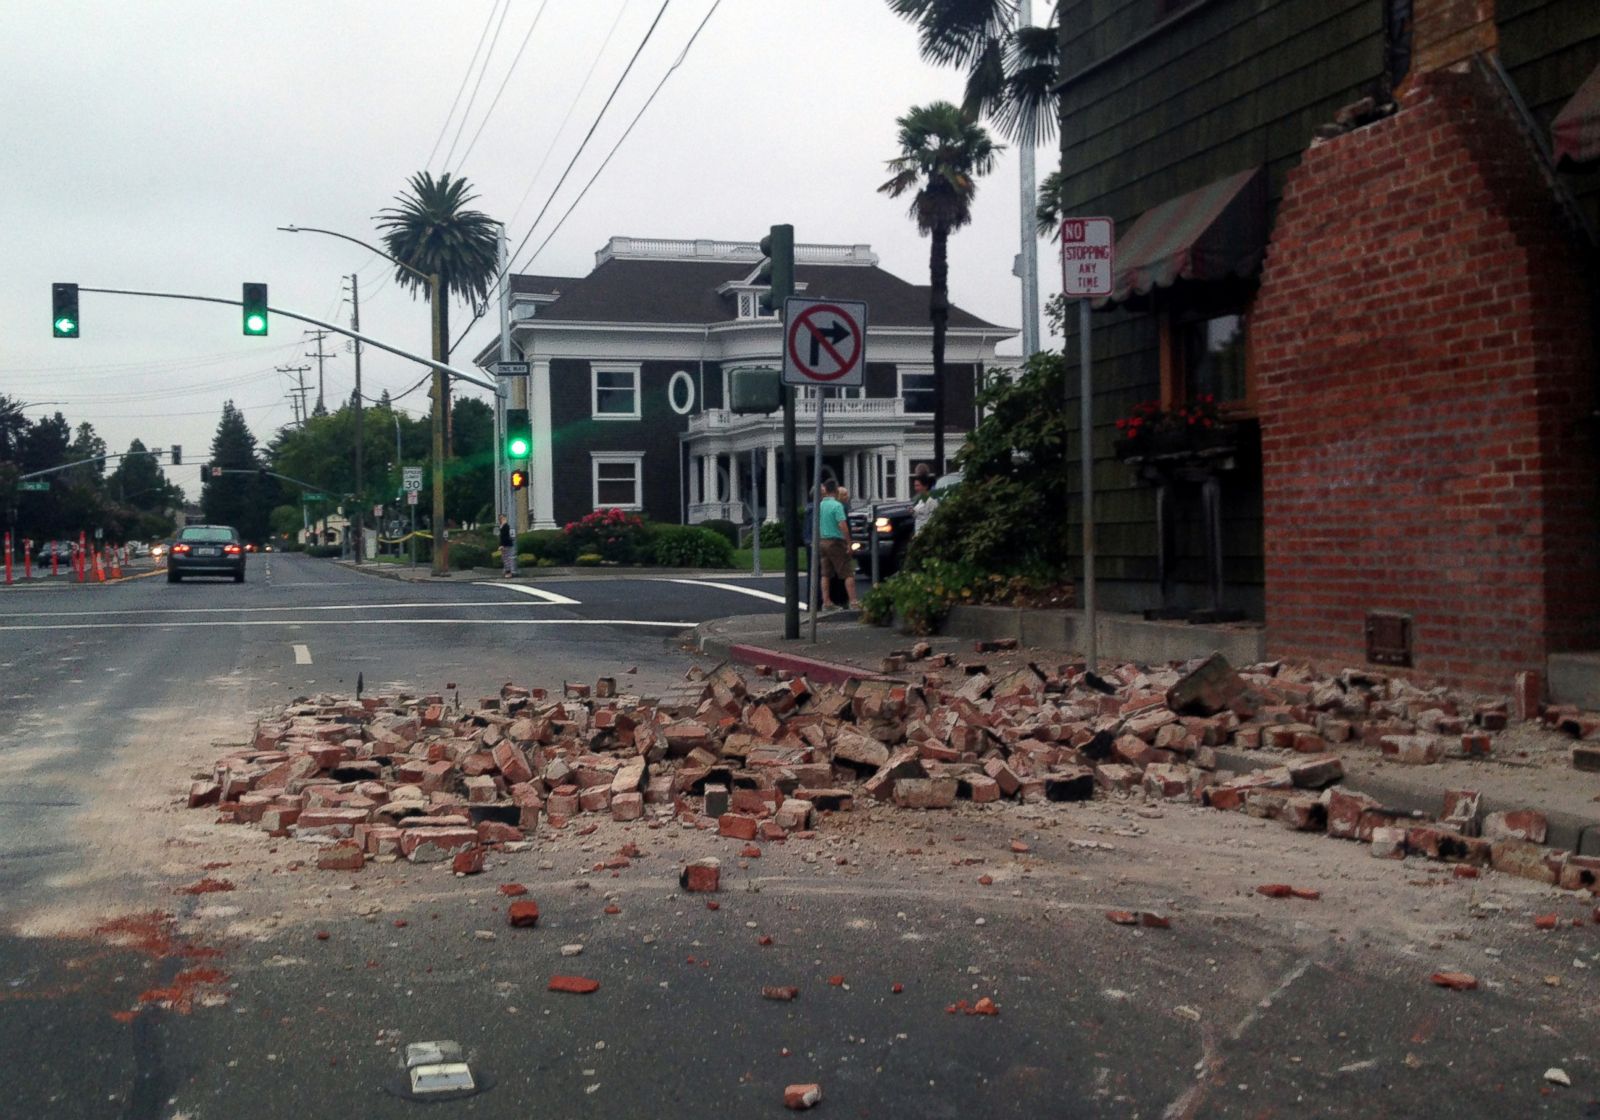 most recent earthquake california